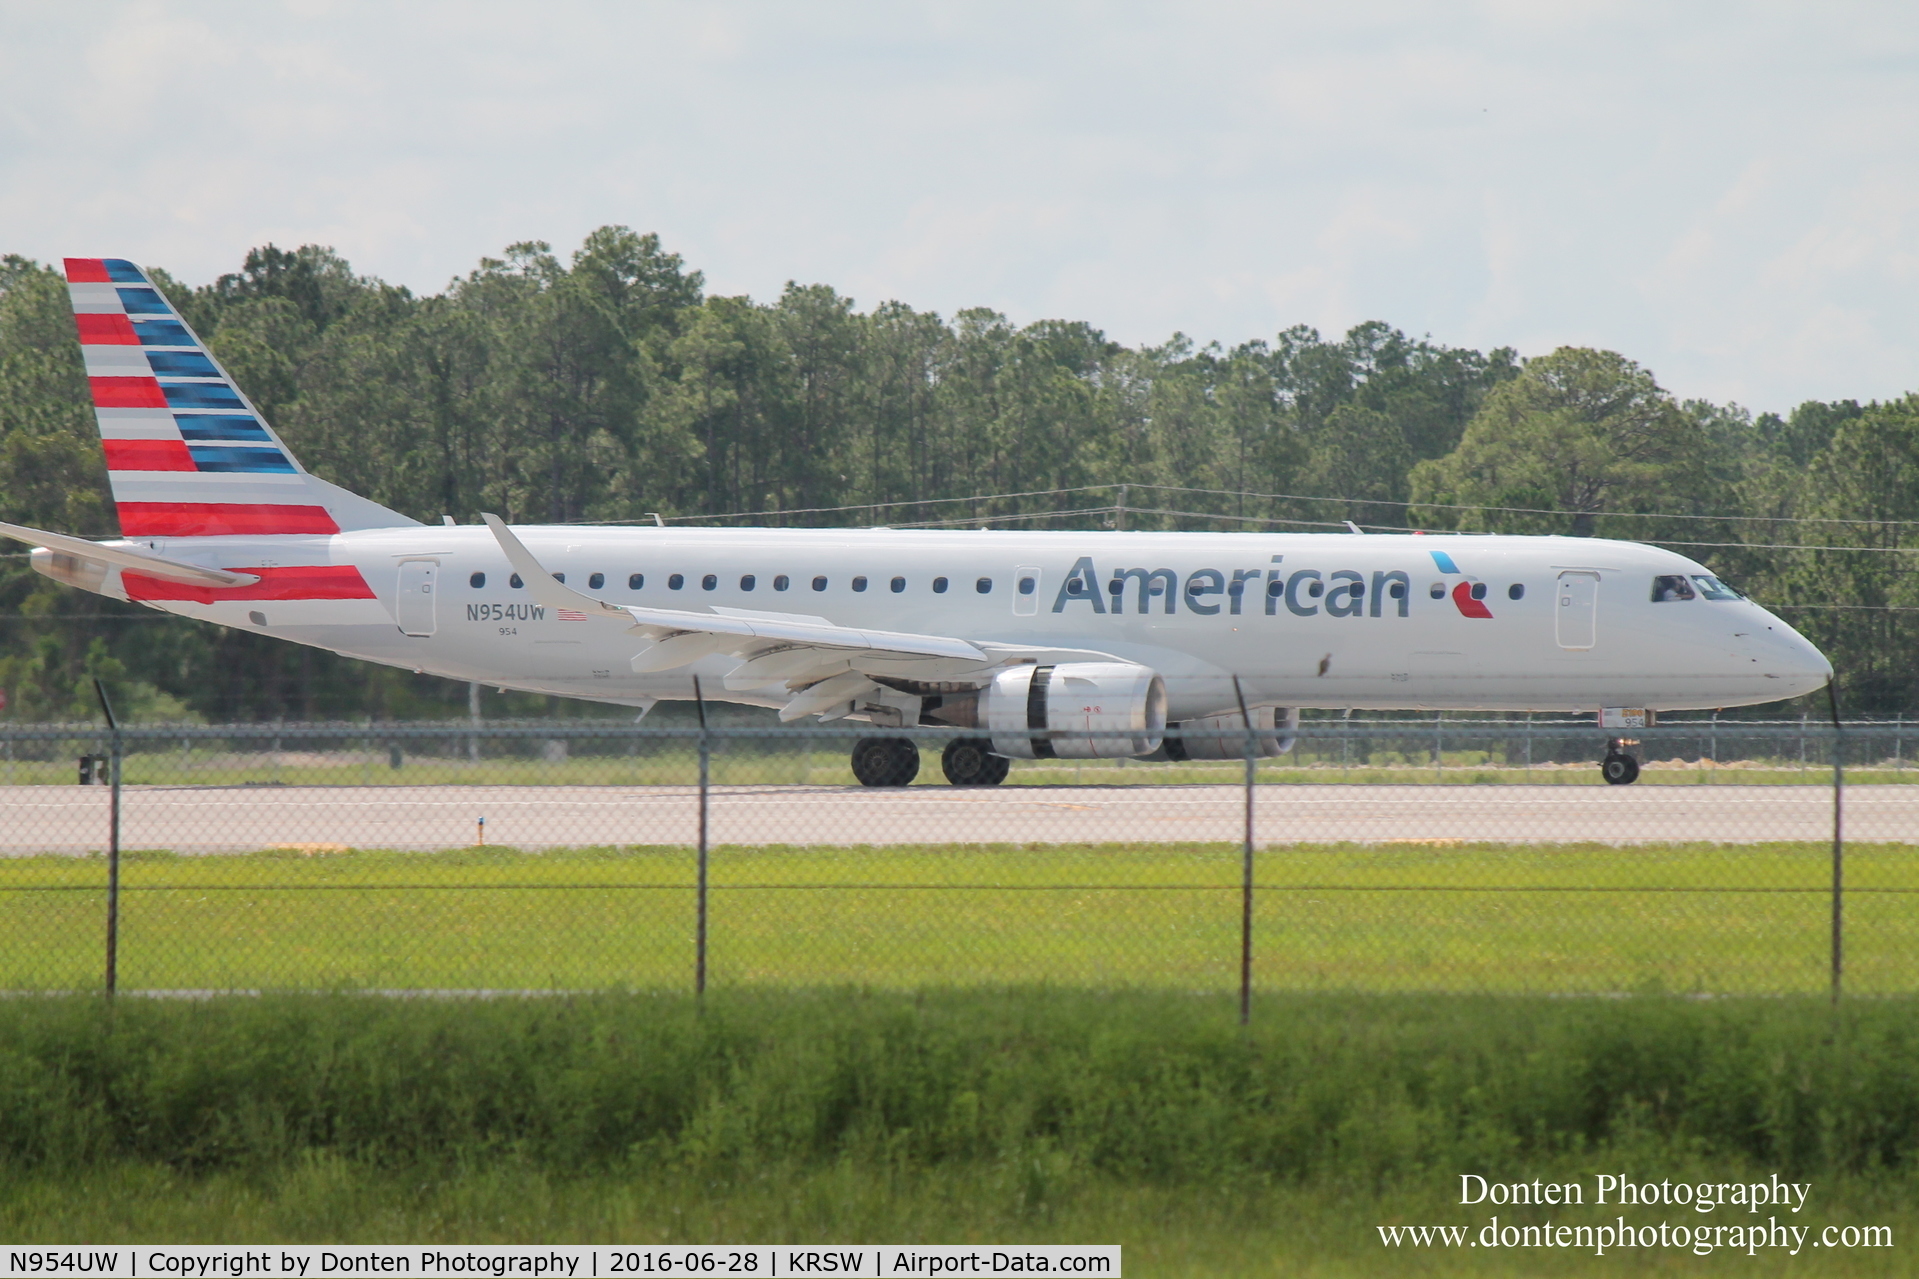 N954UW, 2007 Embraer ERJ-190-100 IGW 190AR C/N 19000139, American Flight (N954UW) arrives at Southwest Florida International Airport following flight from Philadelphia International Airport